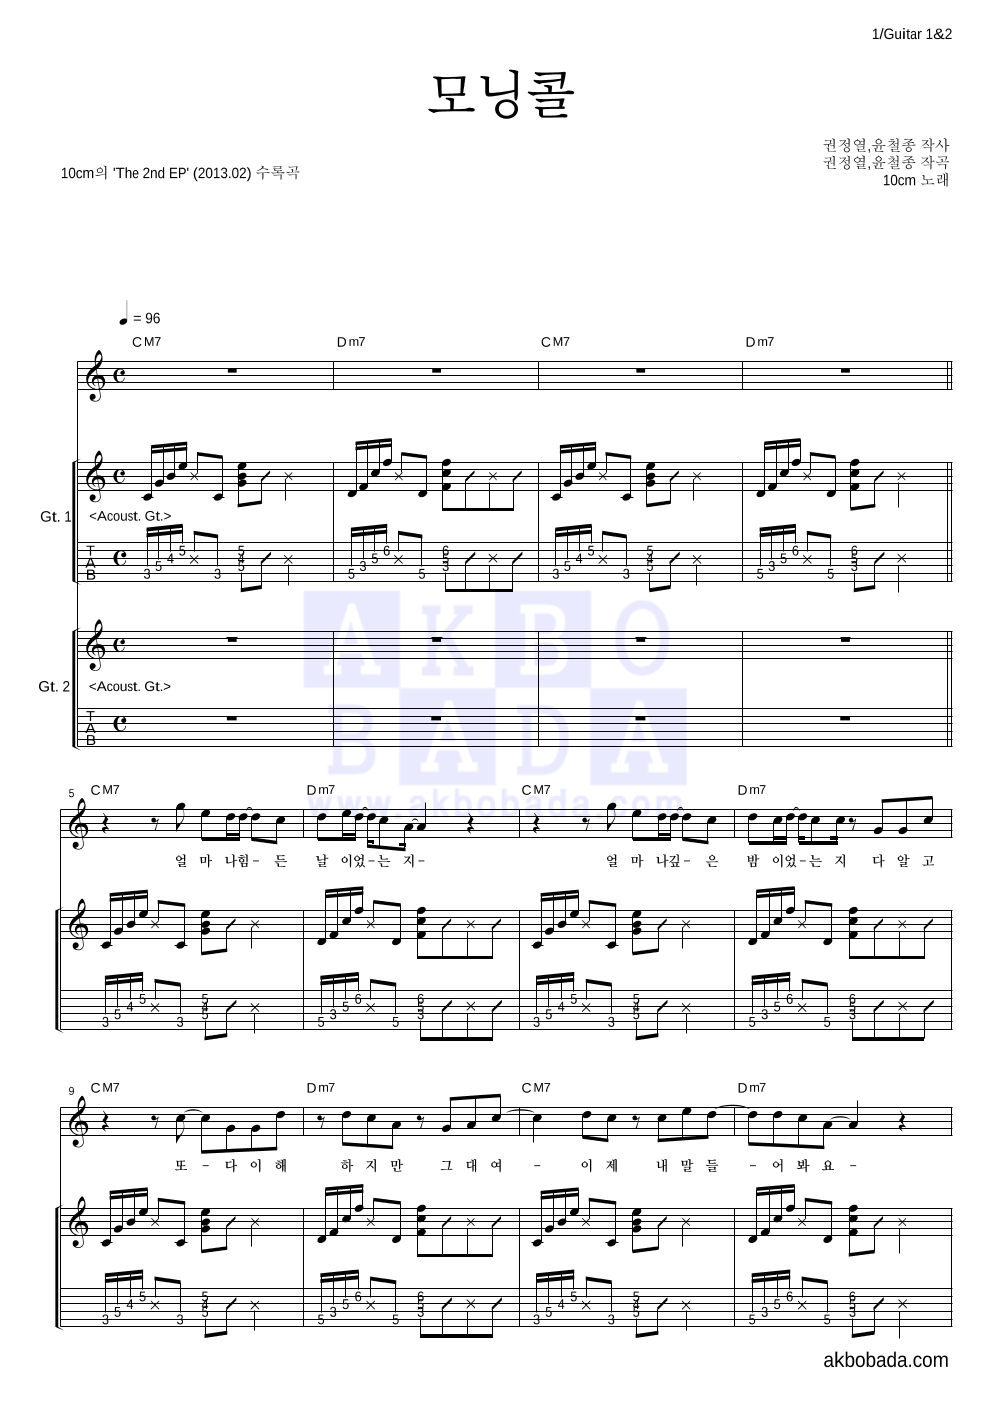 10CM - 모닝콜 기타1,2 악보 